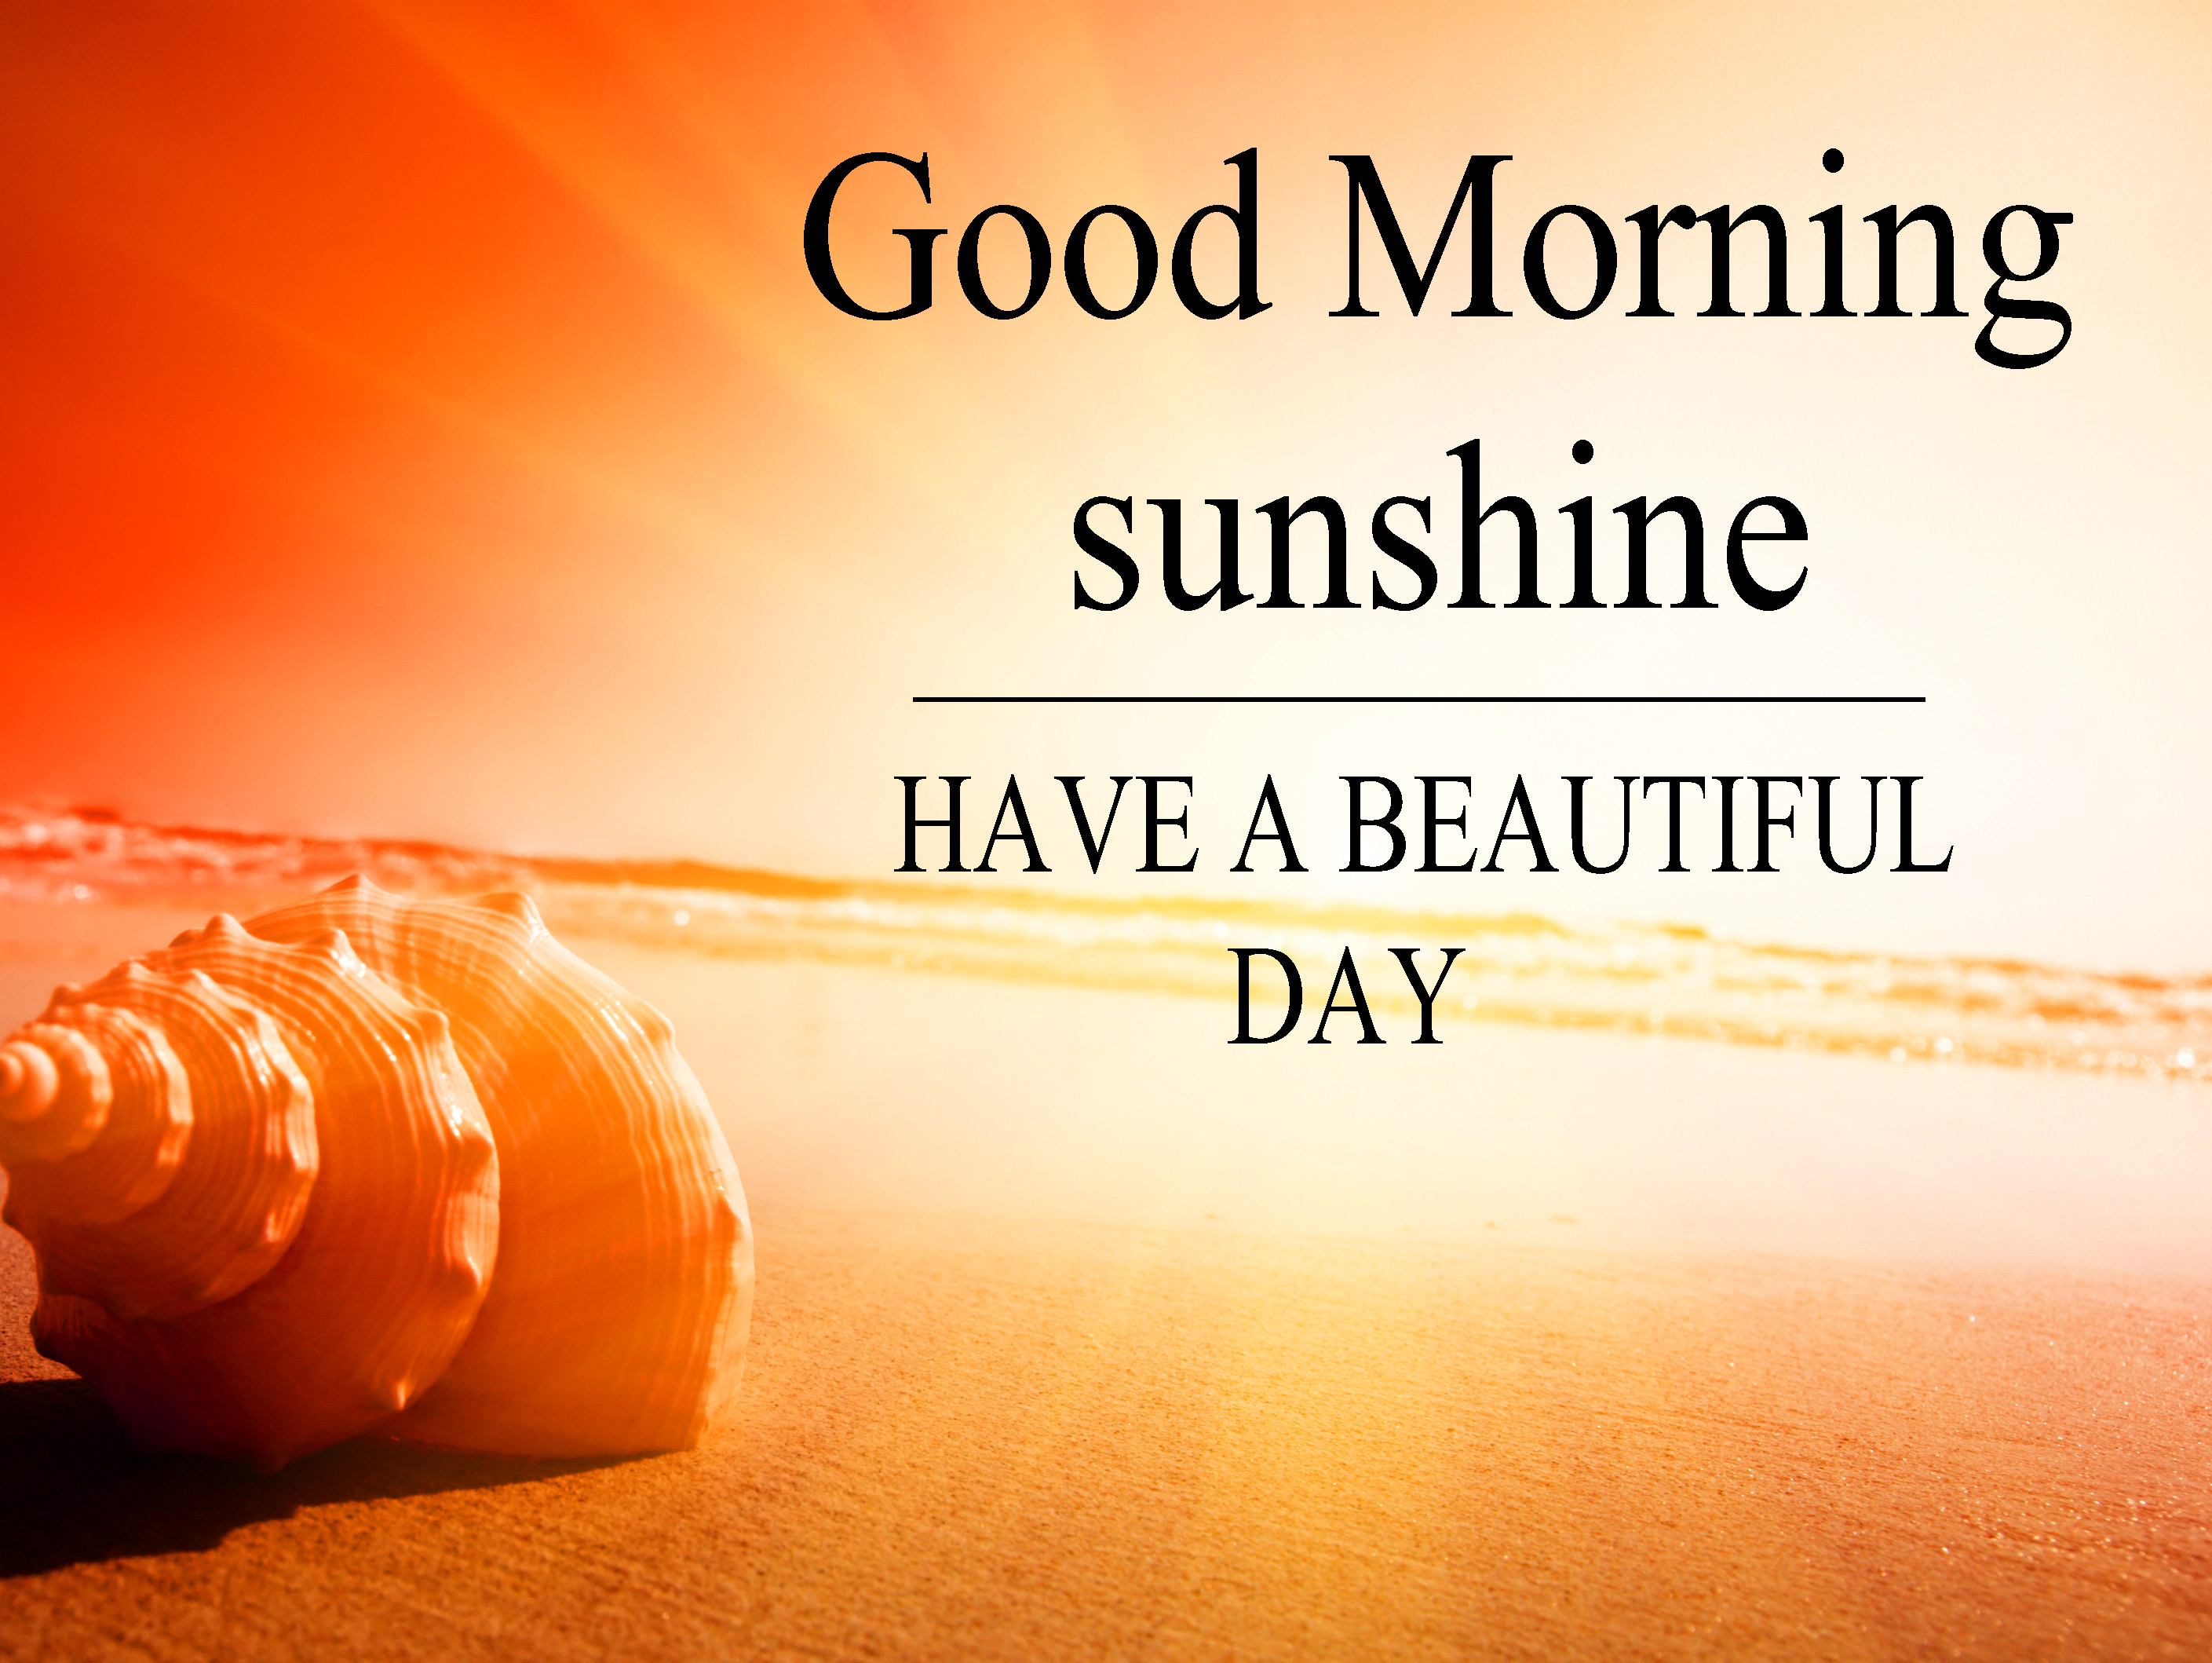 Sunsine Good Morning Images Pics Free Download 